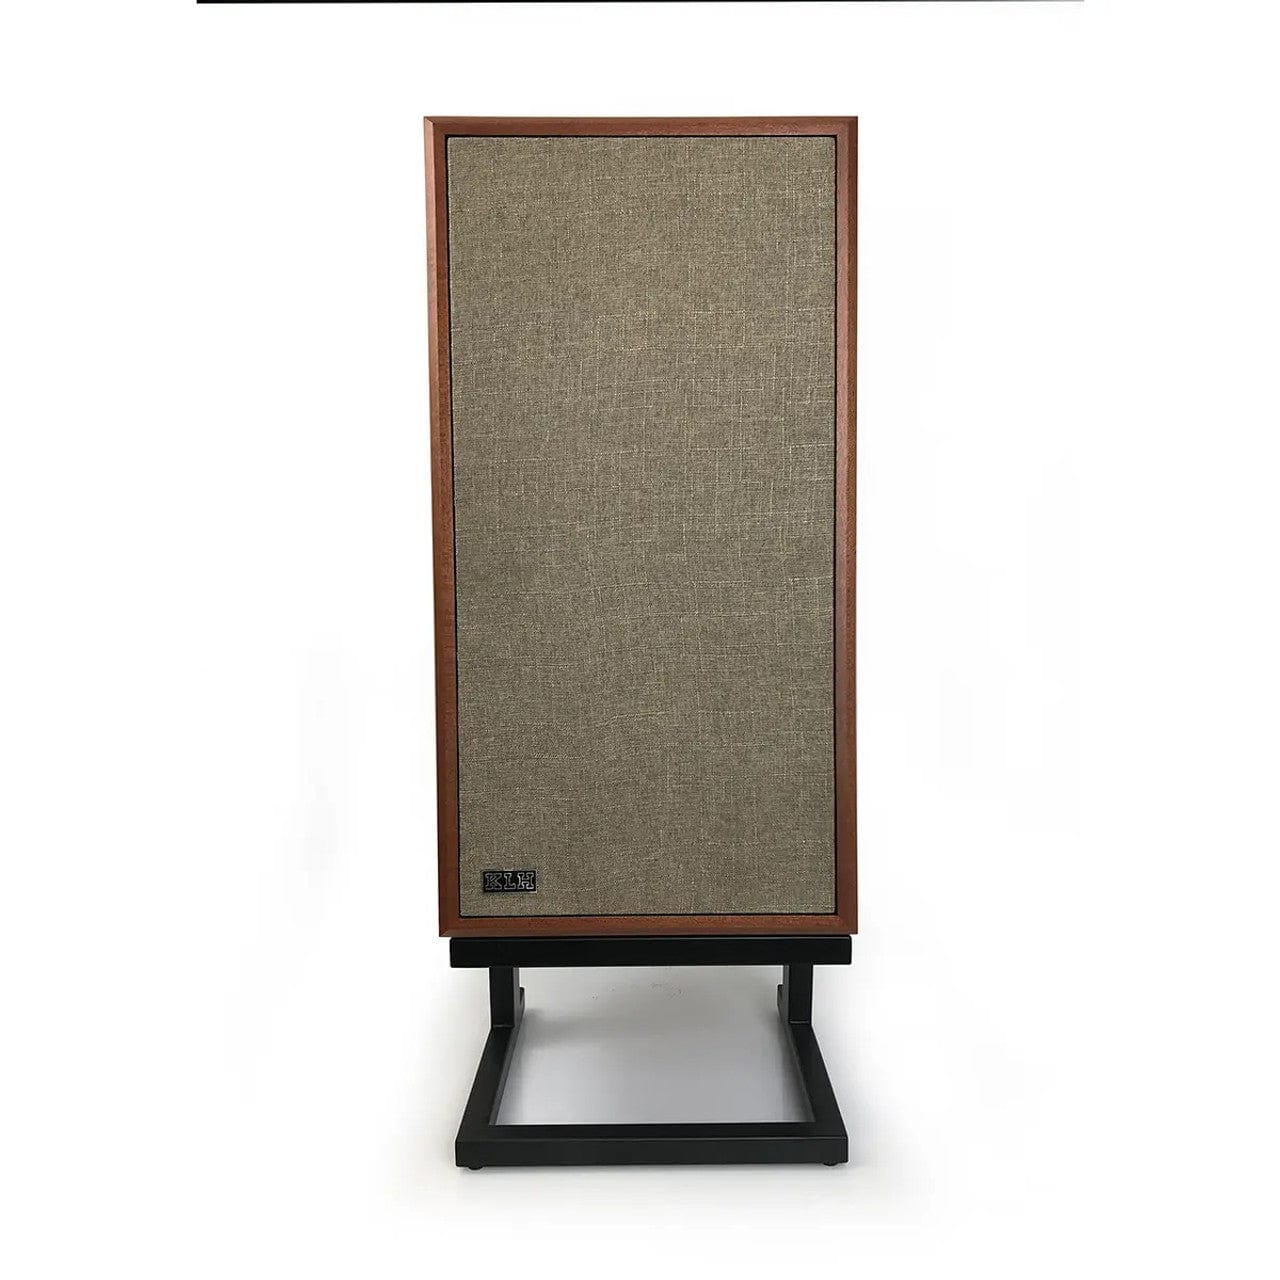 KLH Audio Bookshelf Speakers KLH Model 5 Loudspeakers - Mahogany (Pair)